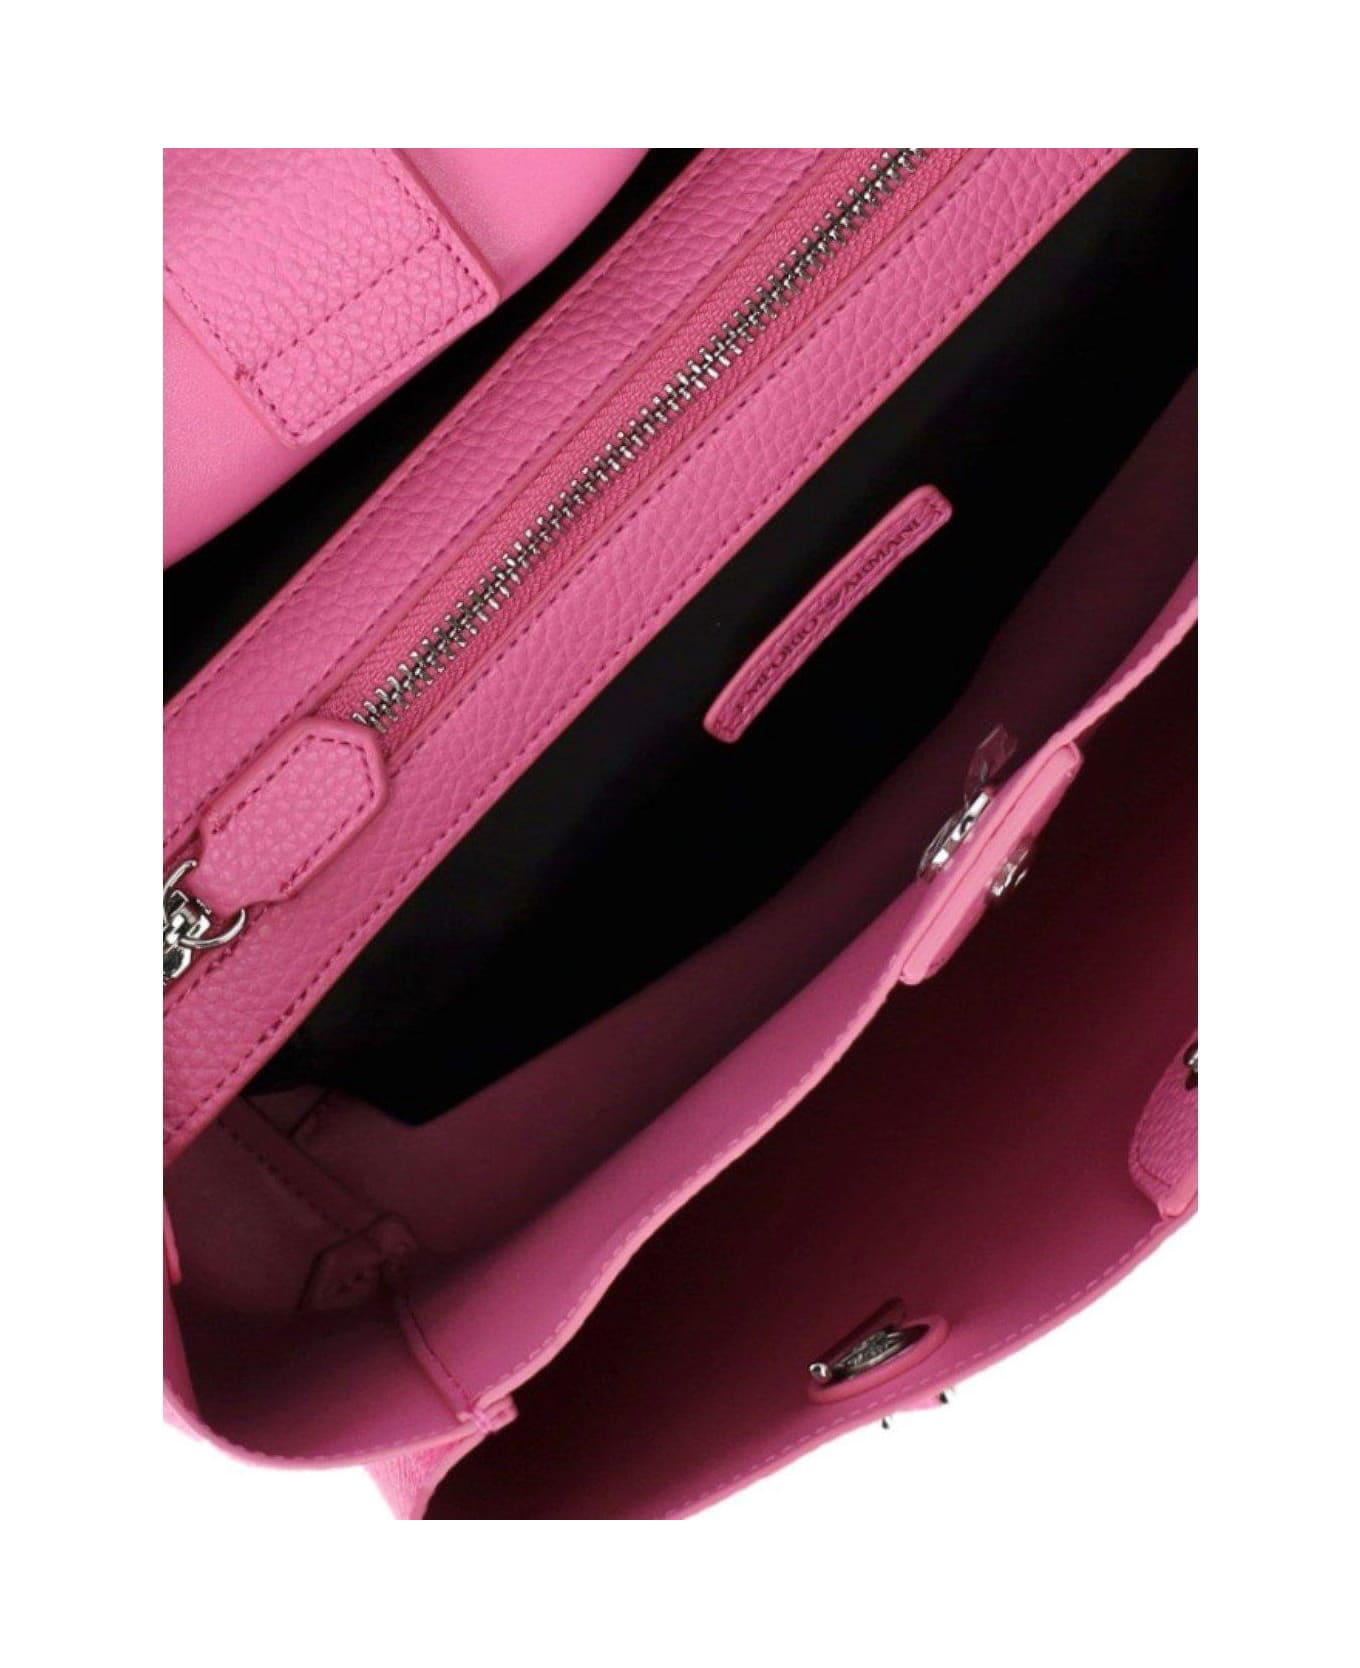 Emporio Armani Logo Printed Tote Bag - Pink